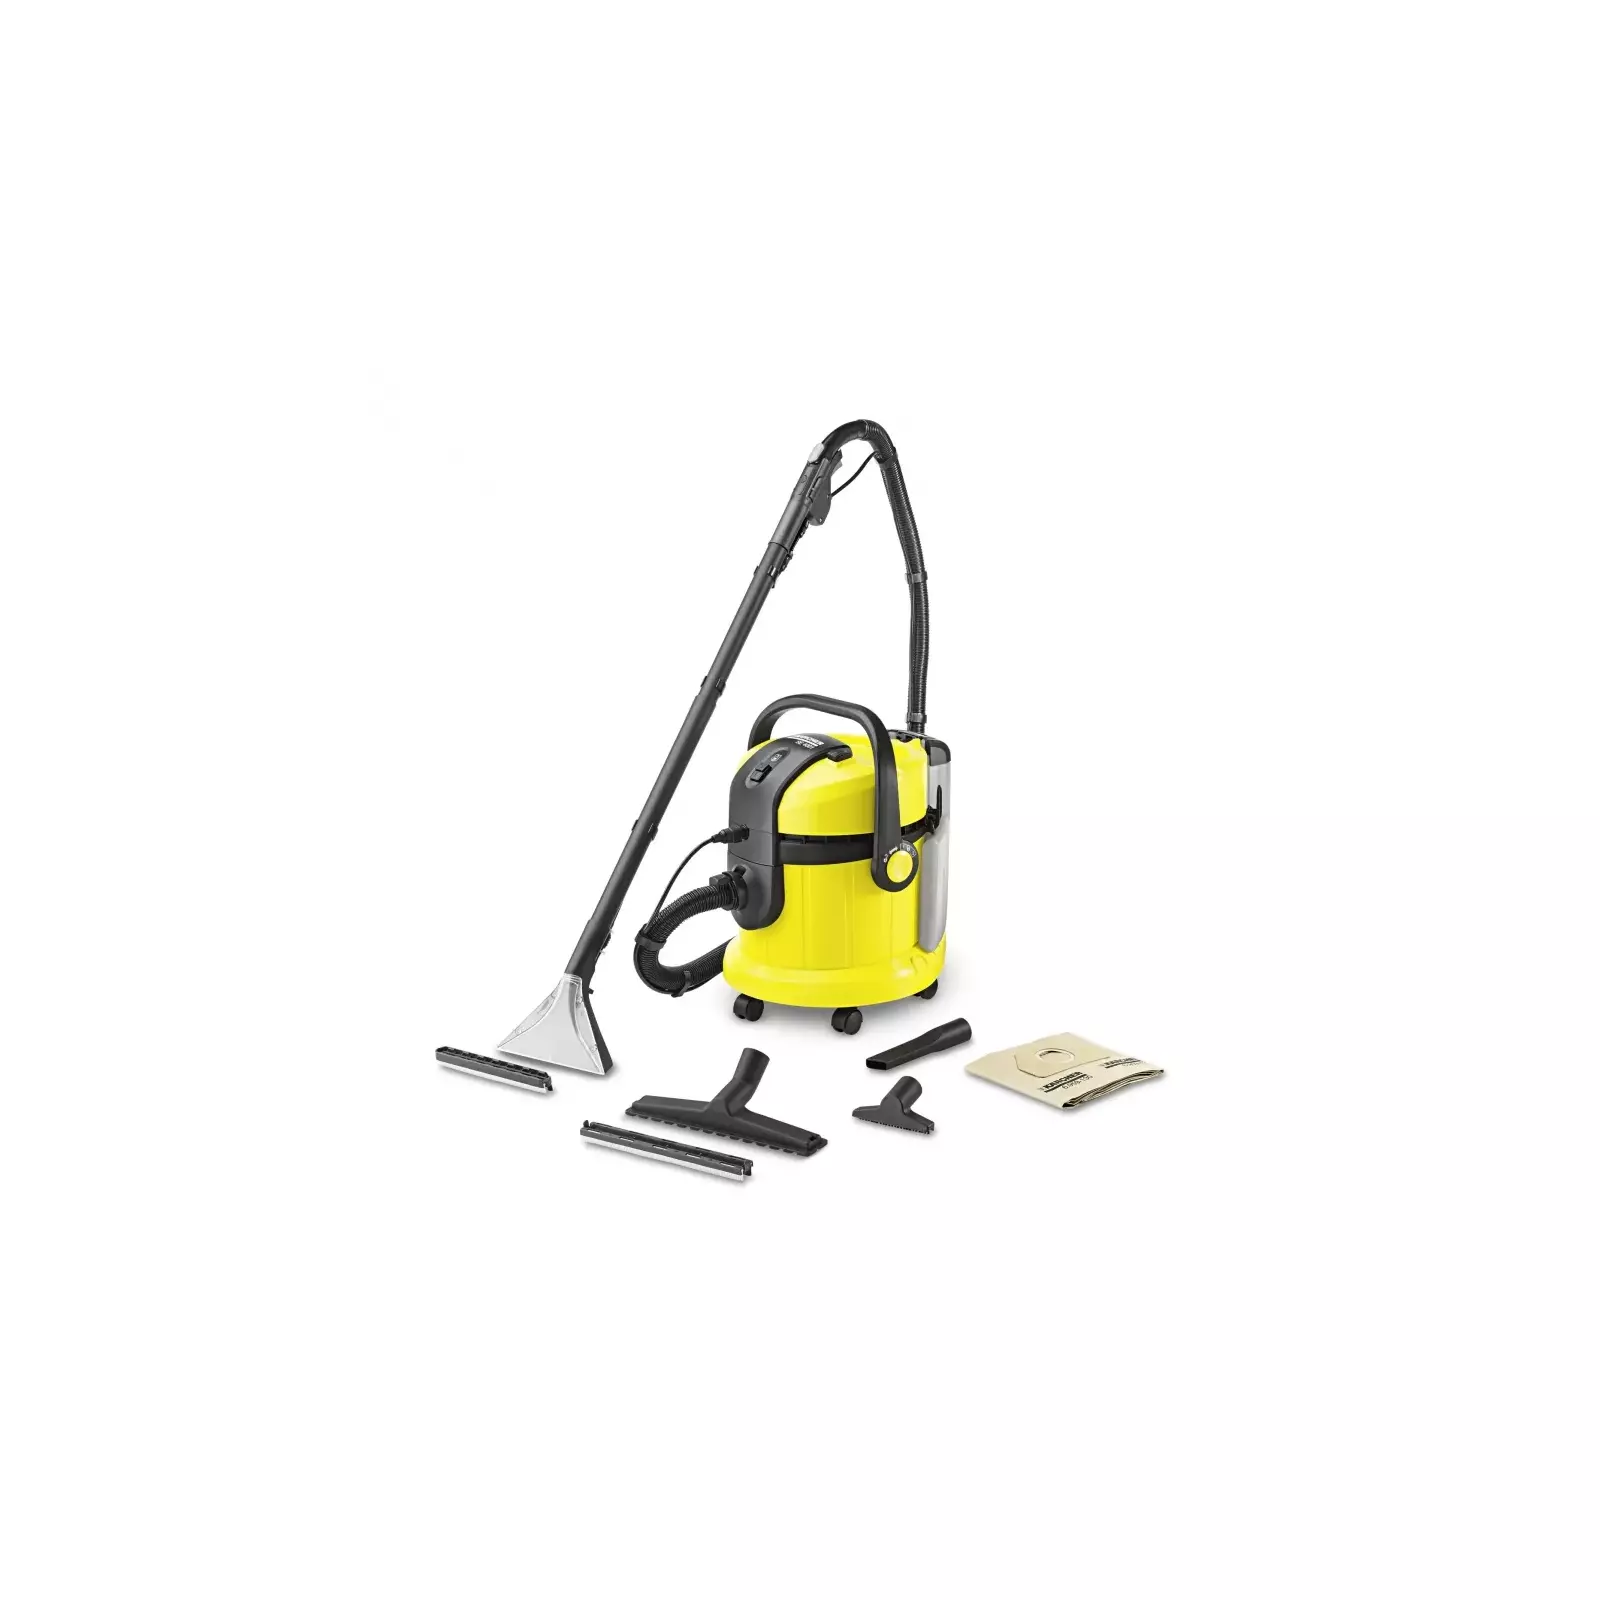 KARCHER SE 4001 1.081-130.0 Wet / Dry Vacuum Cleaner